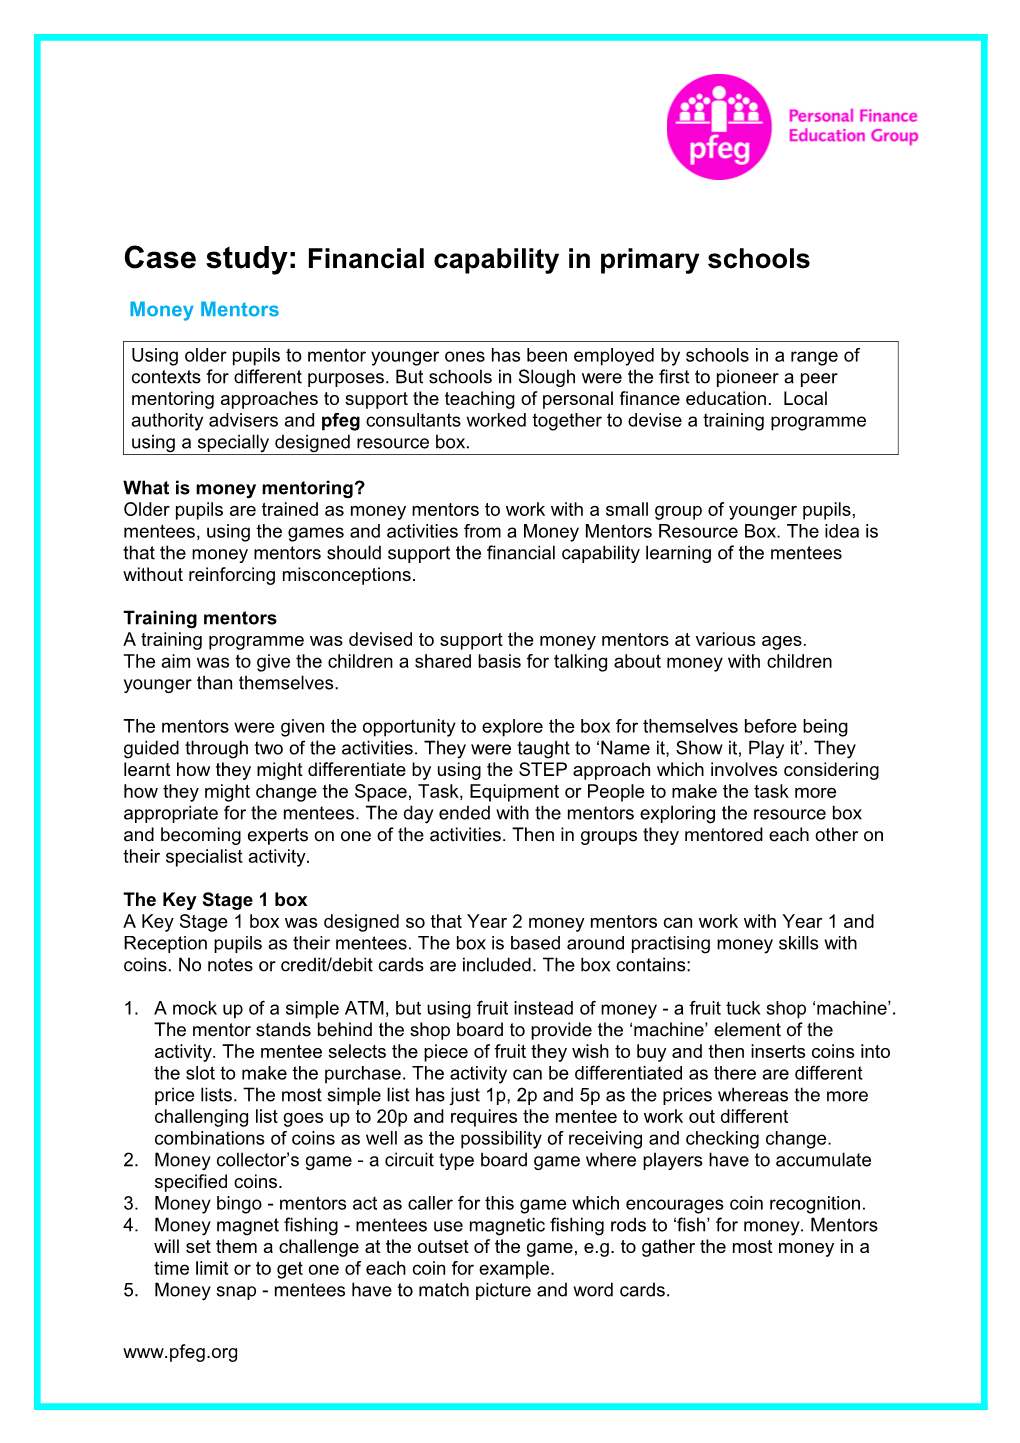 Case Study: Financial Capability in Primary Schools